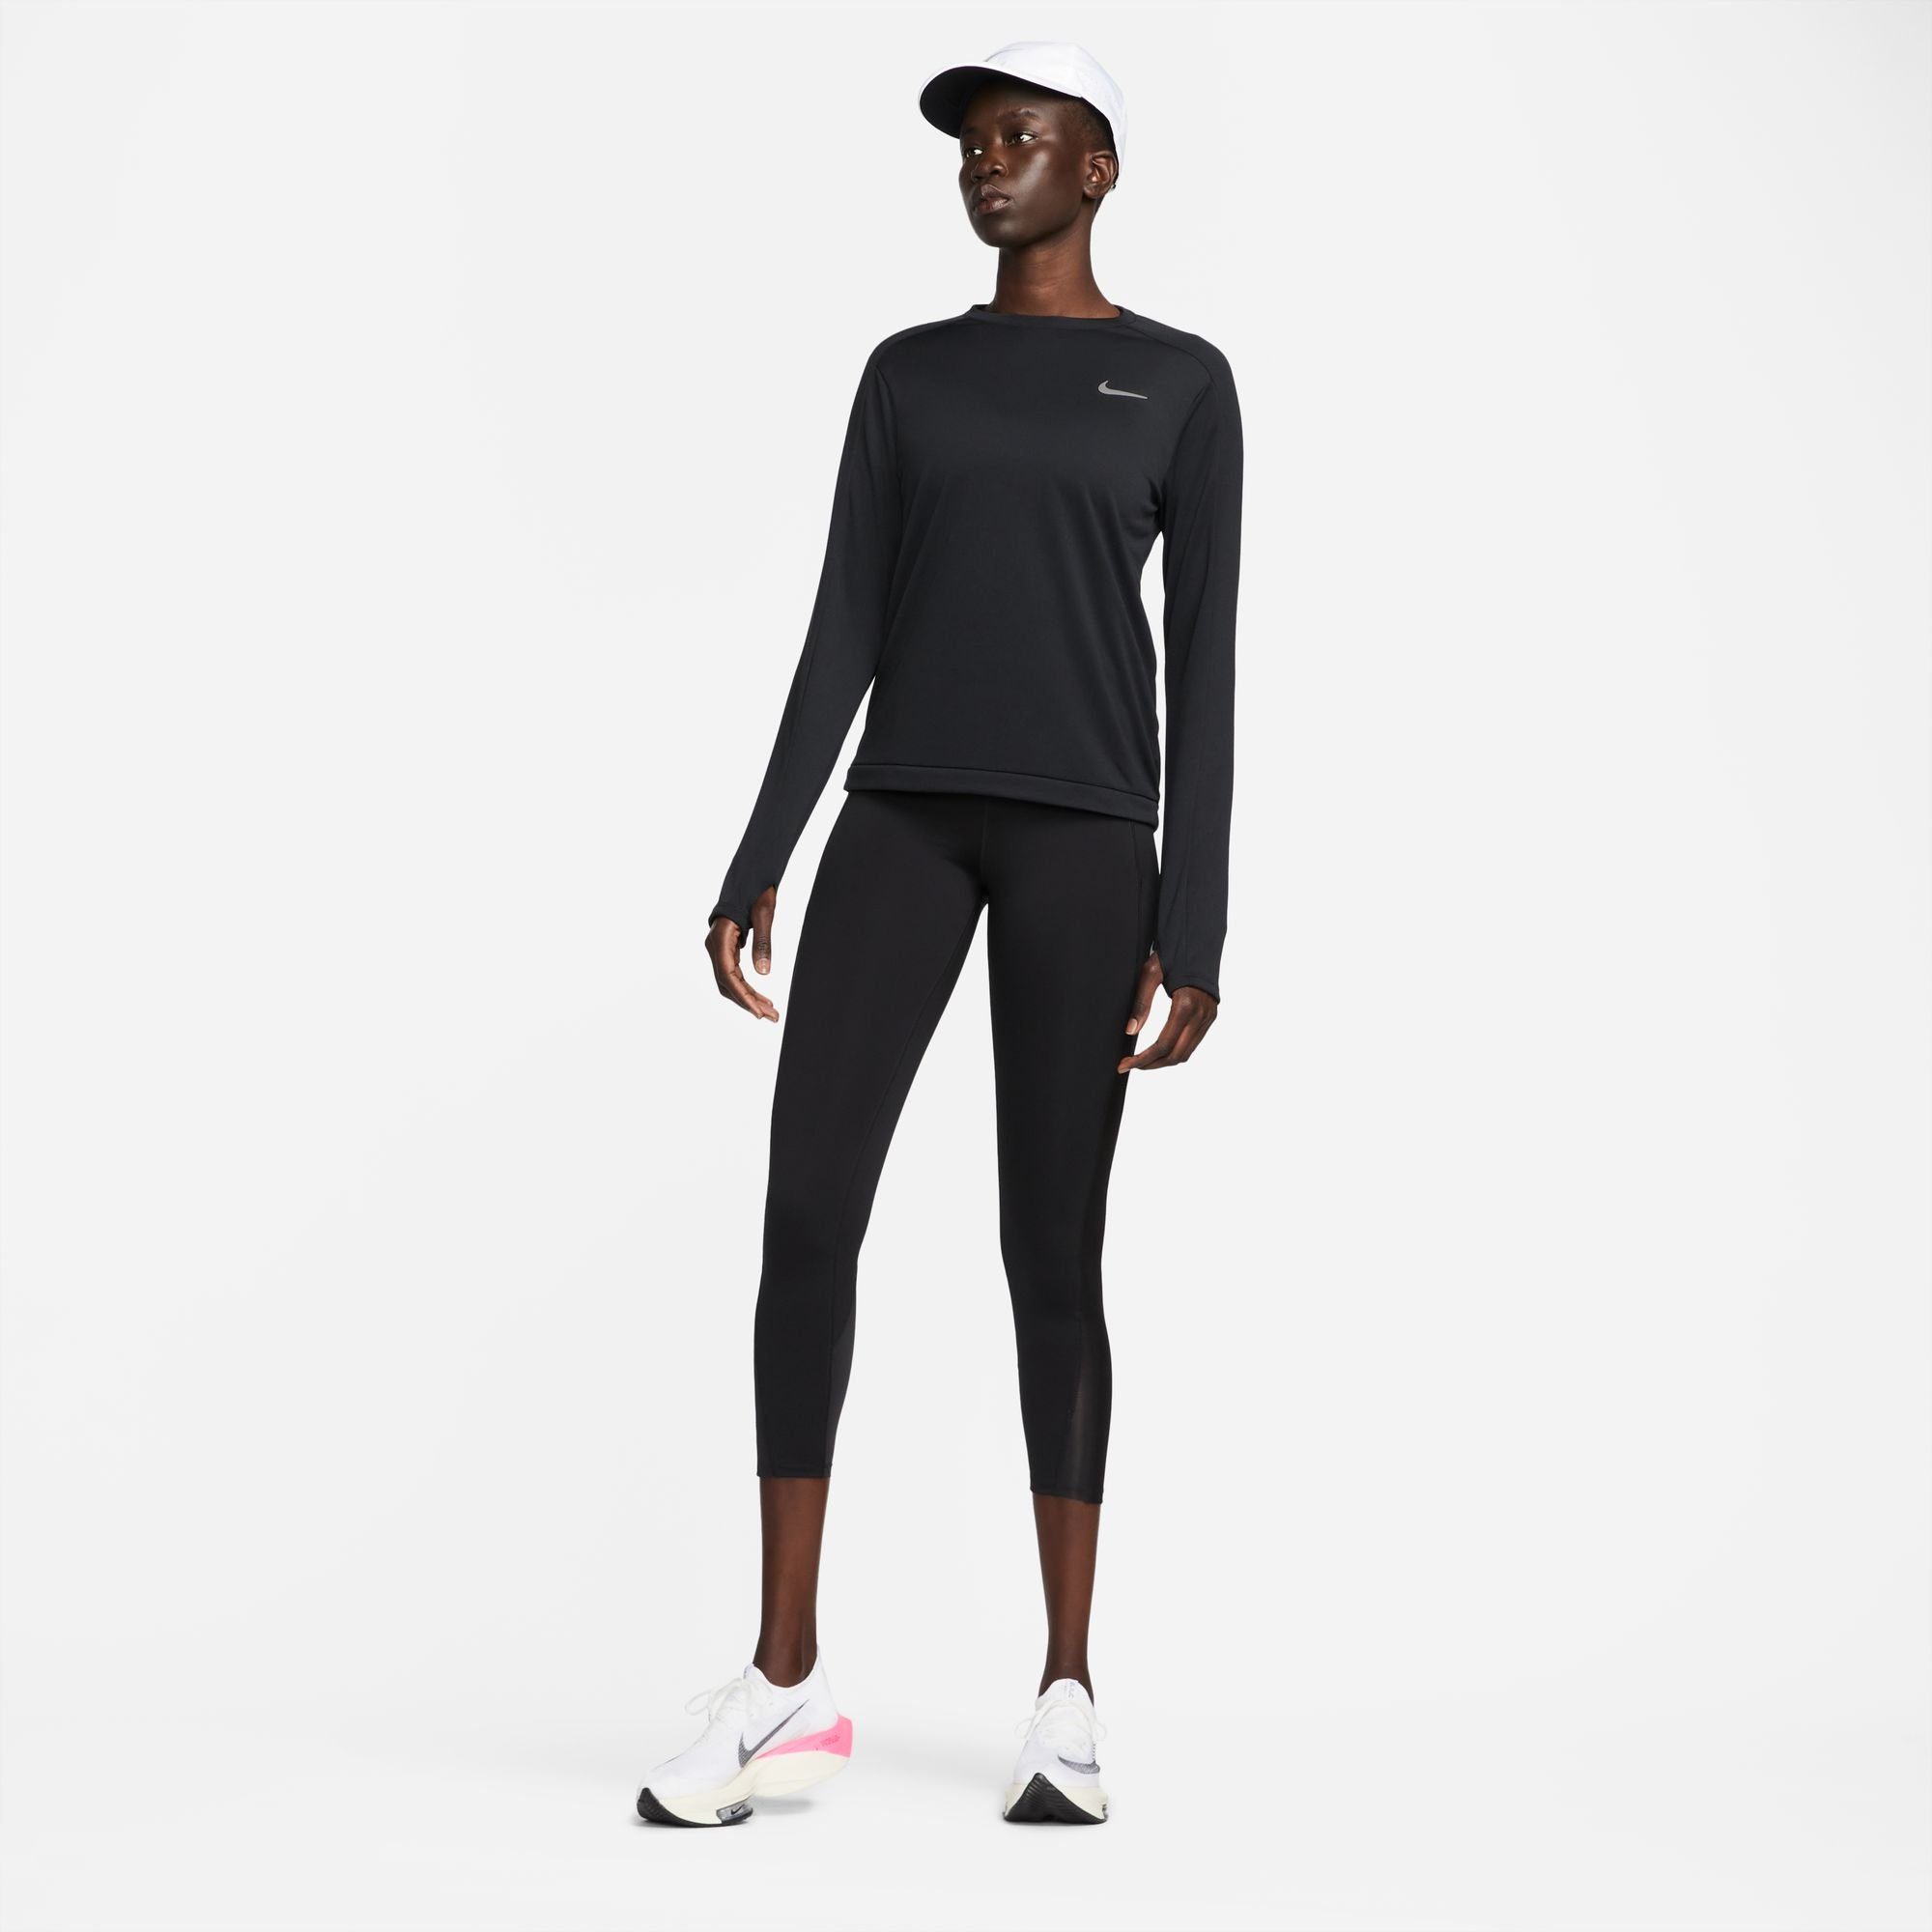 SILV CREW-NECK Laufshirt DRI-FIT BLACK/REFLECTIVE TOP Nike WOMEN'S RUNNING